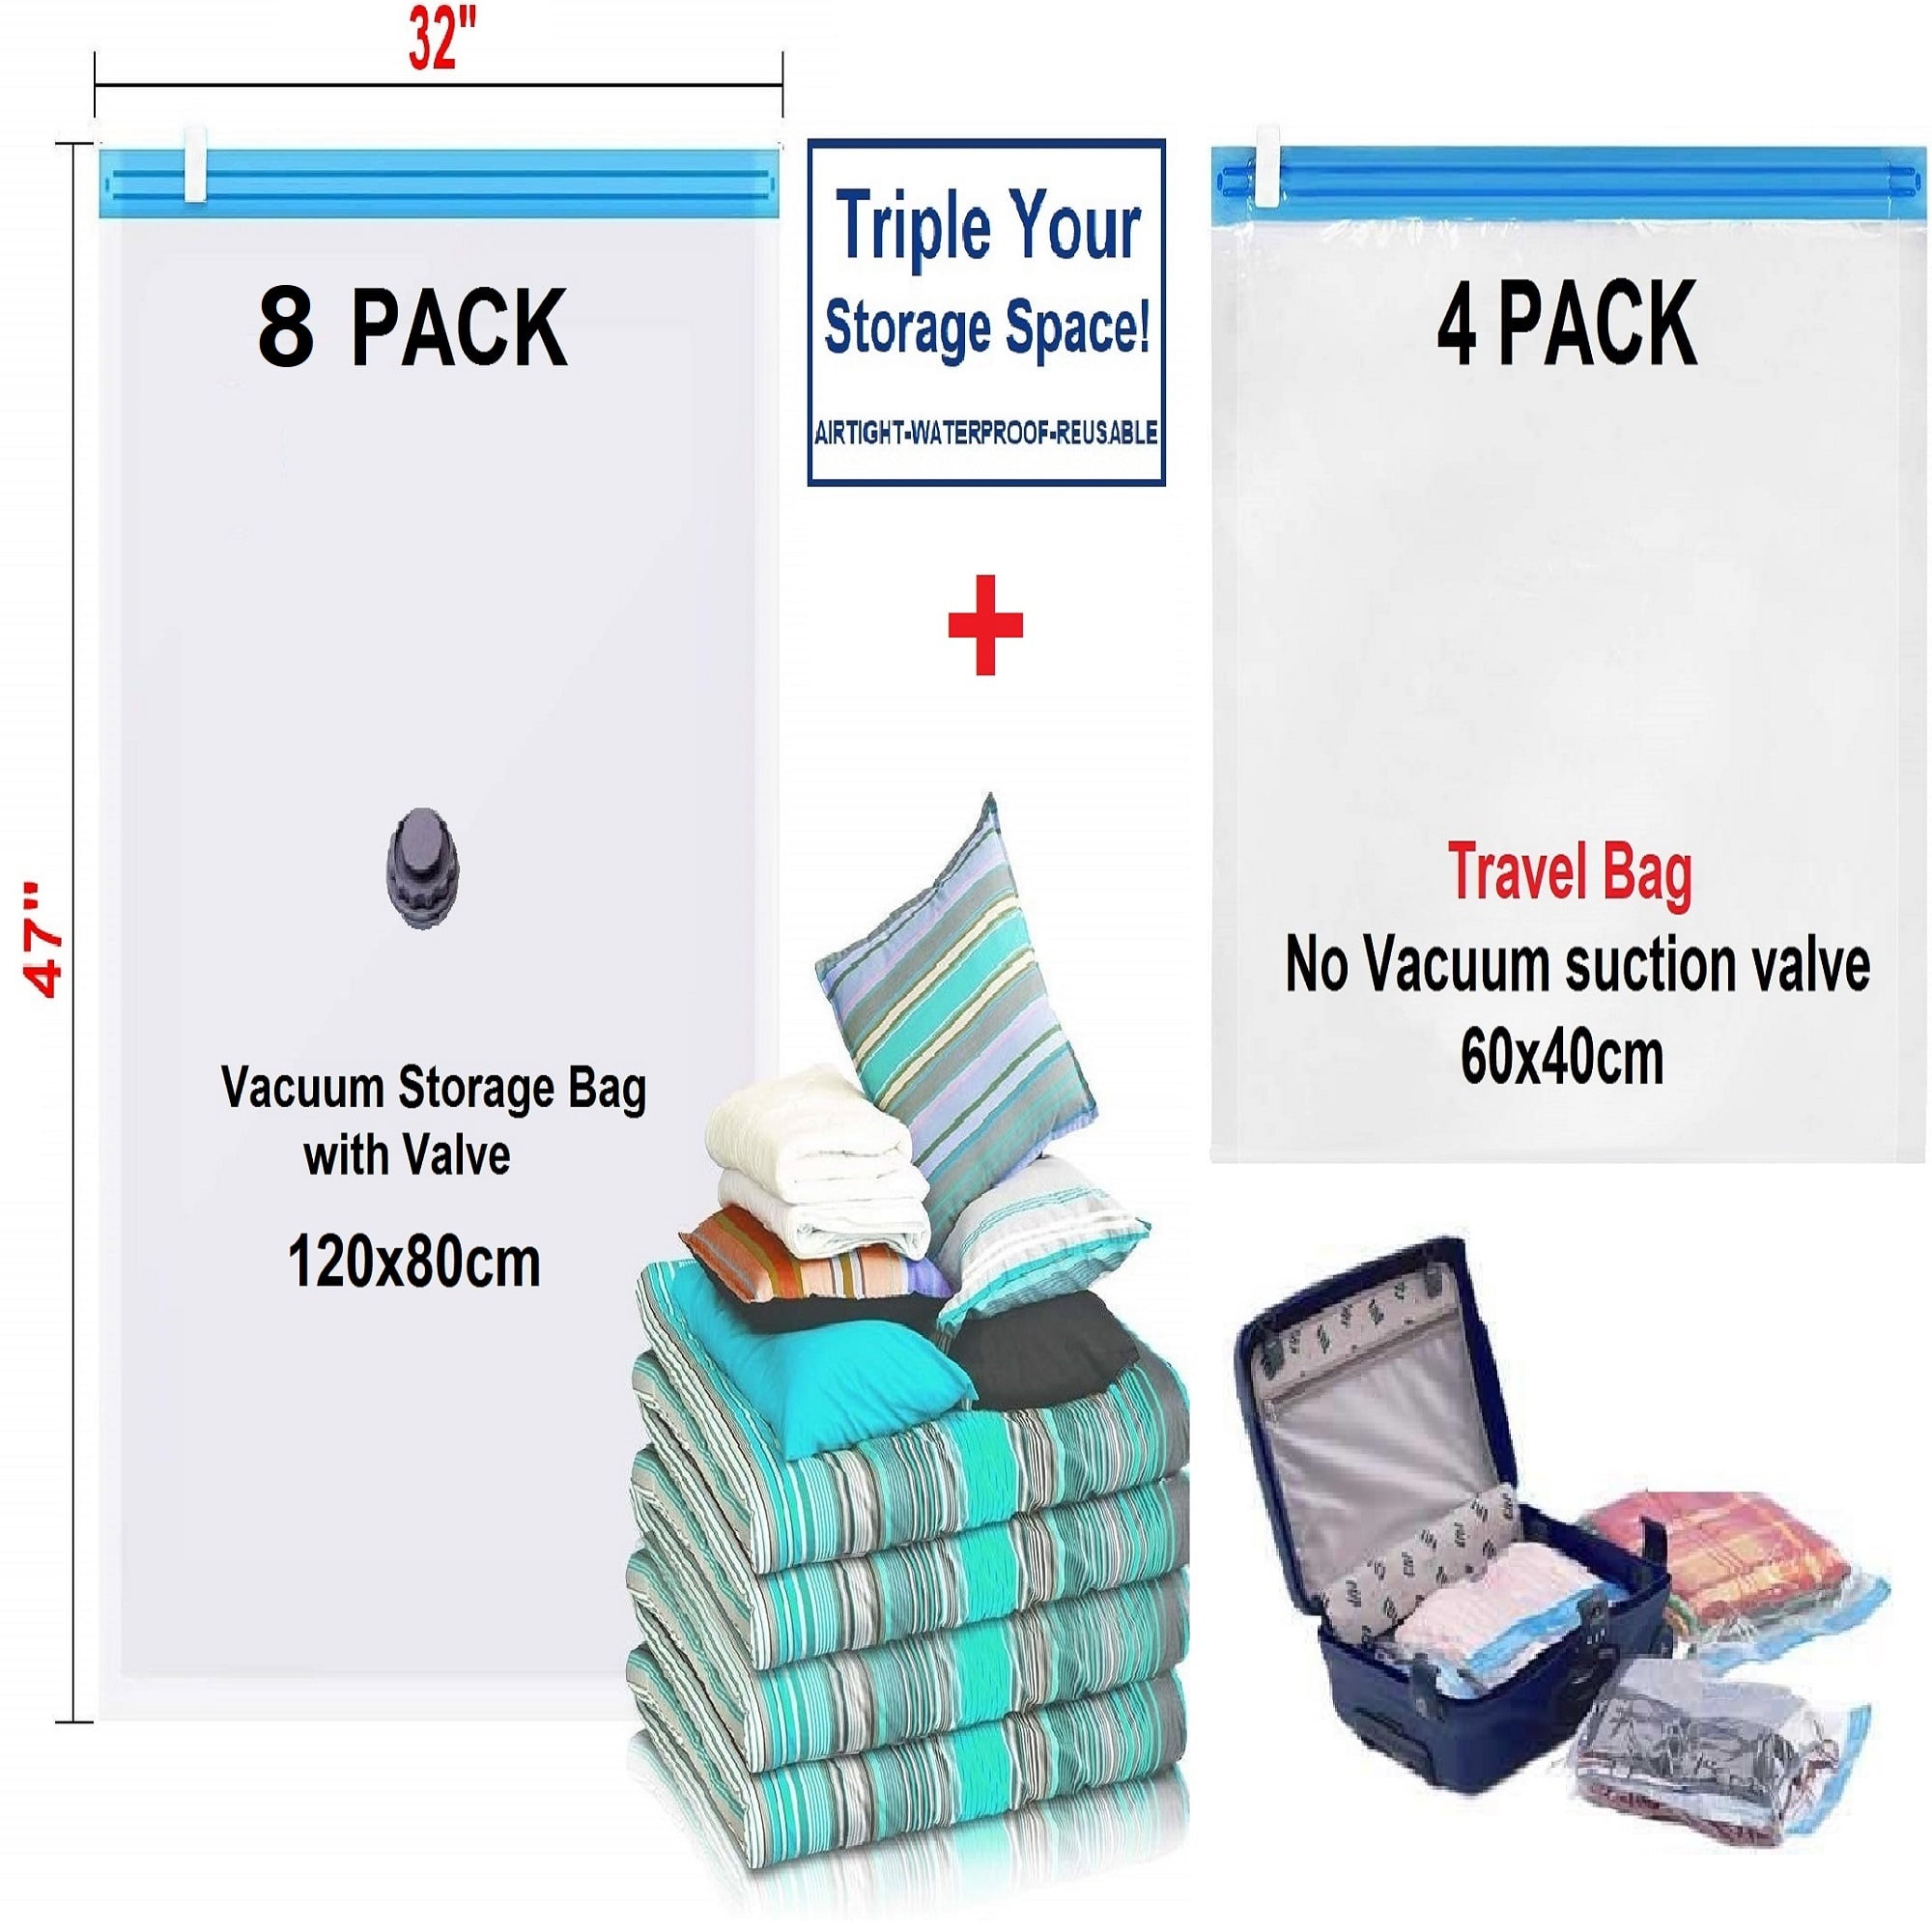 Value Pack Vacuum Storage Bags Medium, Large, XL and Jumbo Sizes